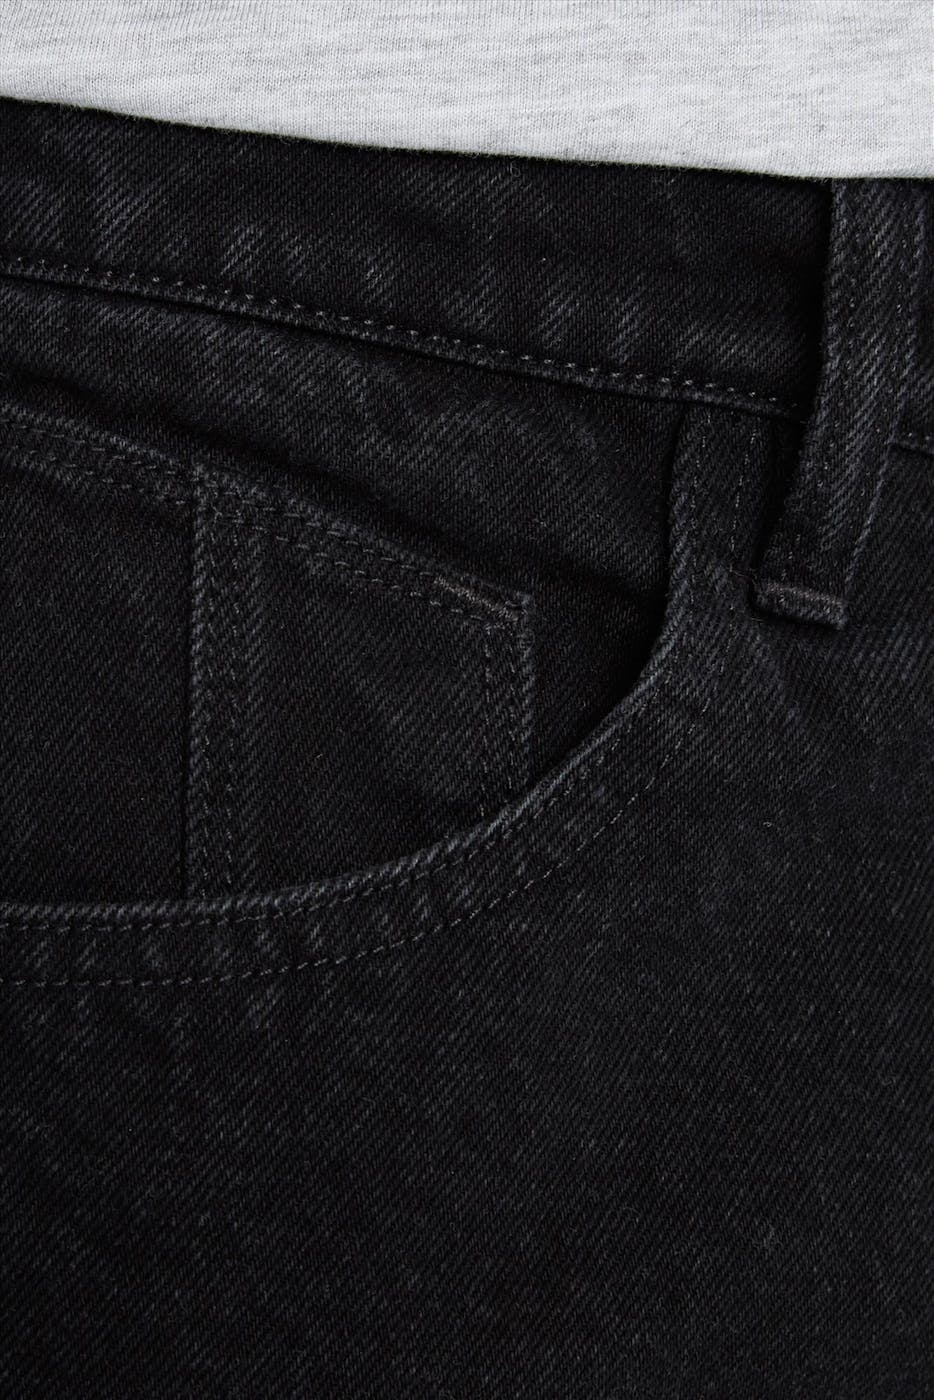 Volcom - Zwarte Billow baggy jeans